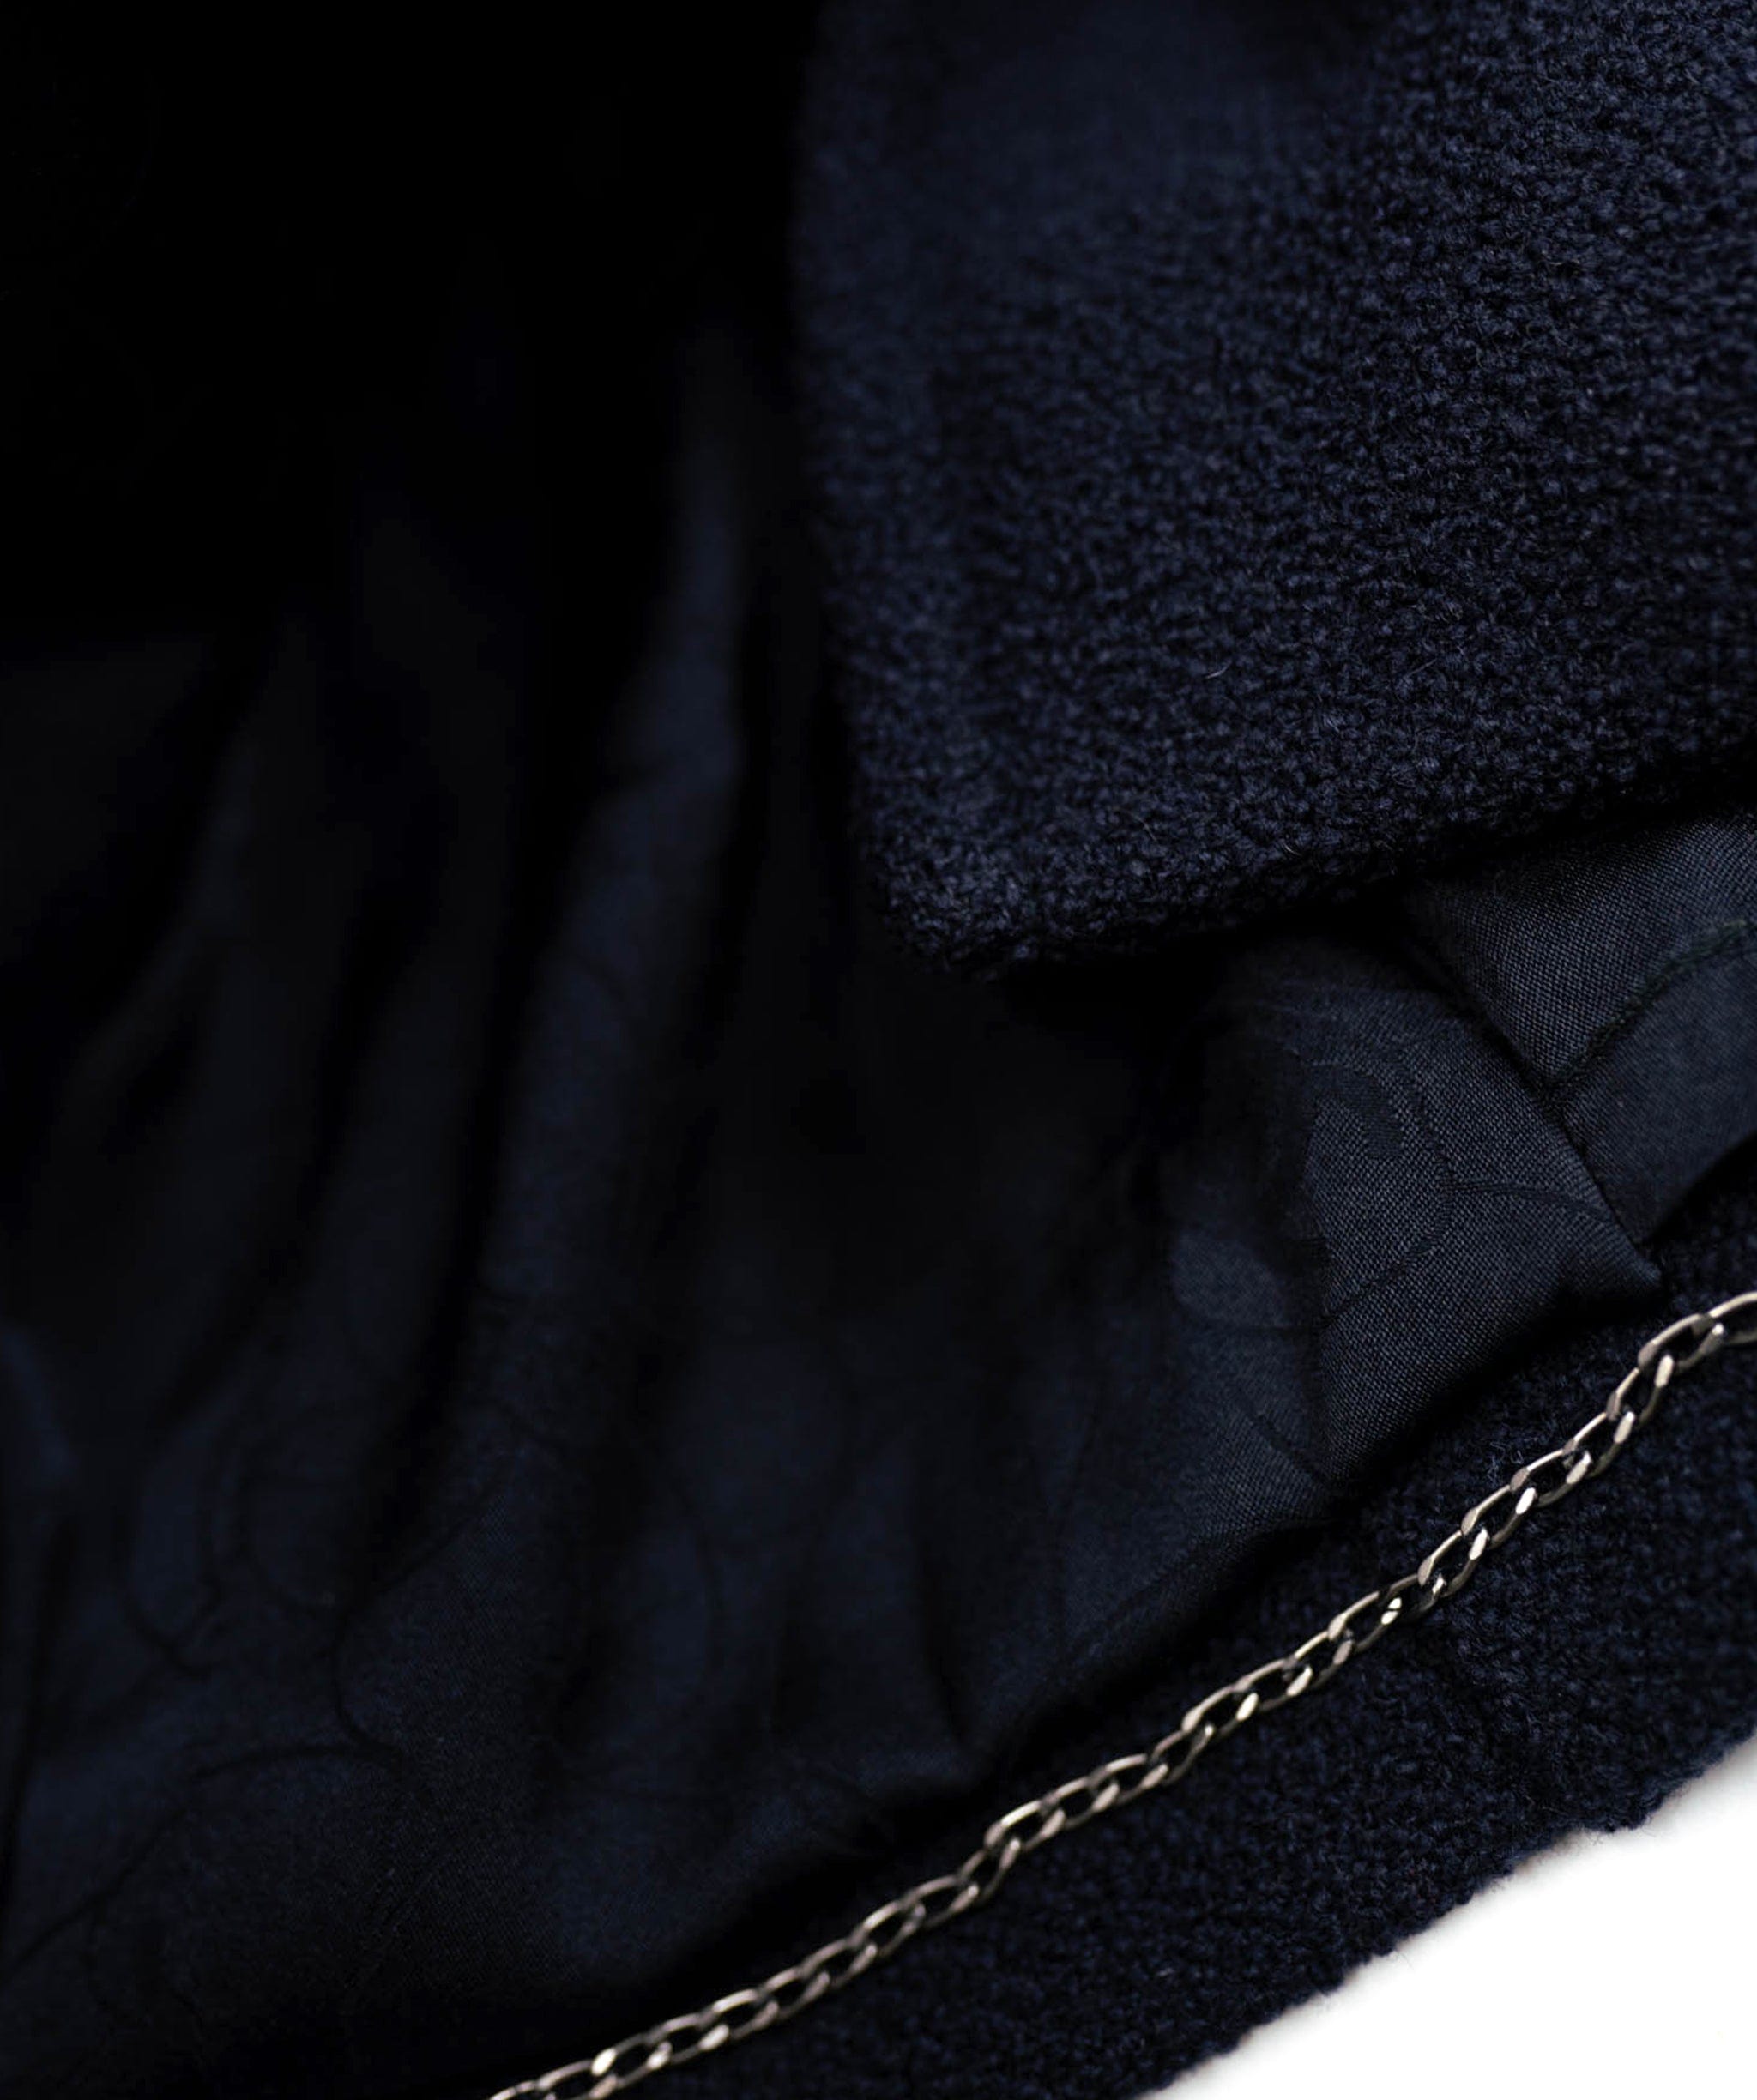 Chanel Chanel navy blue tweed coat with hood - AWL3884